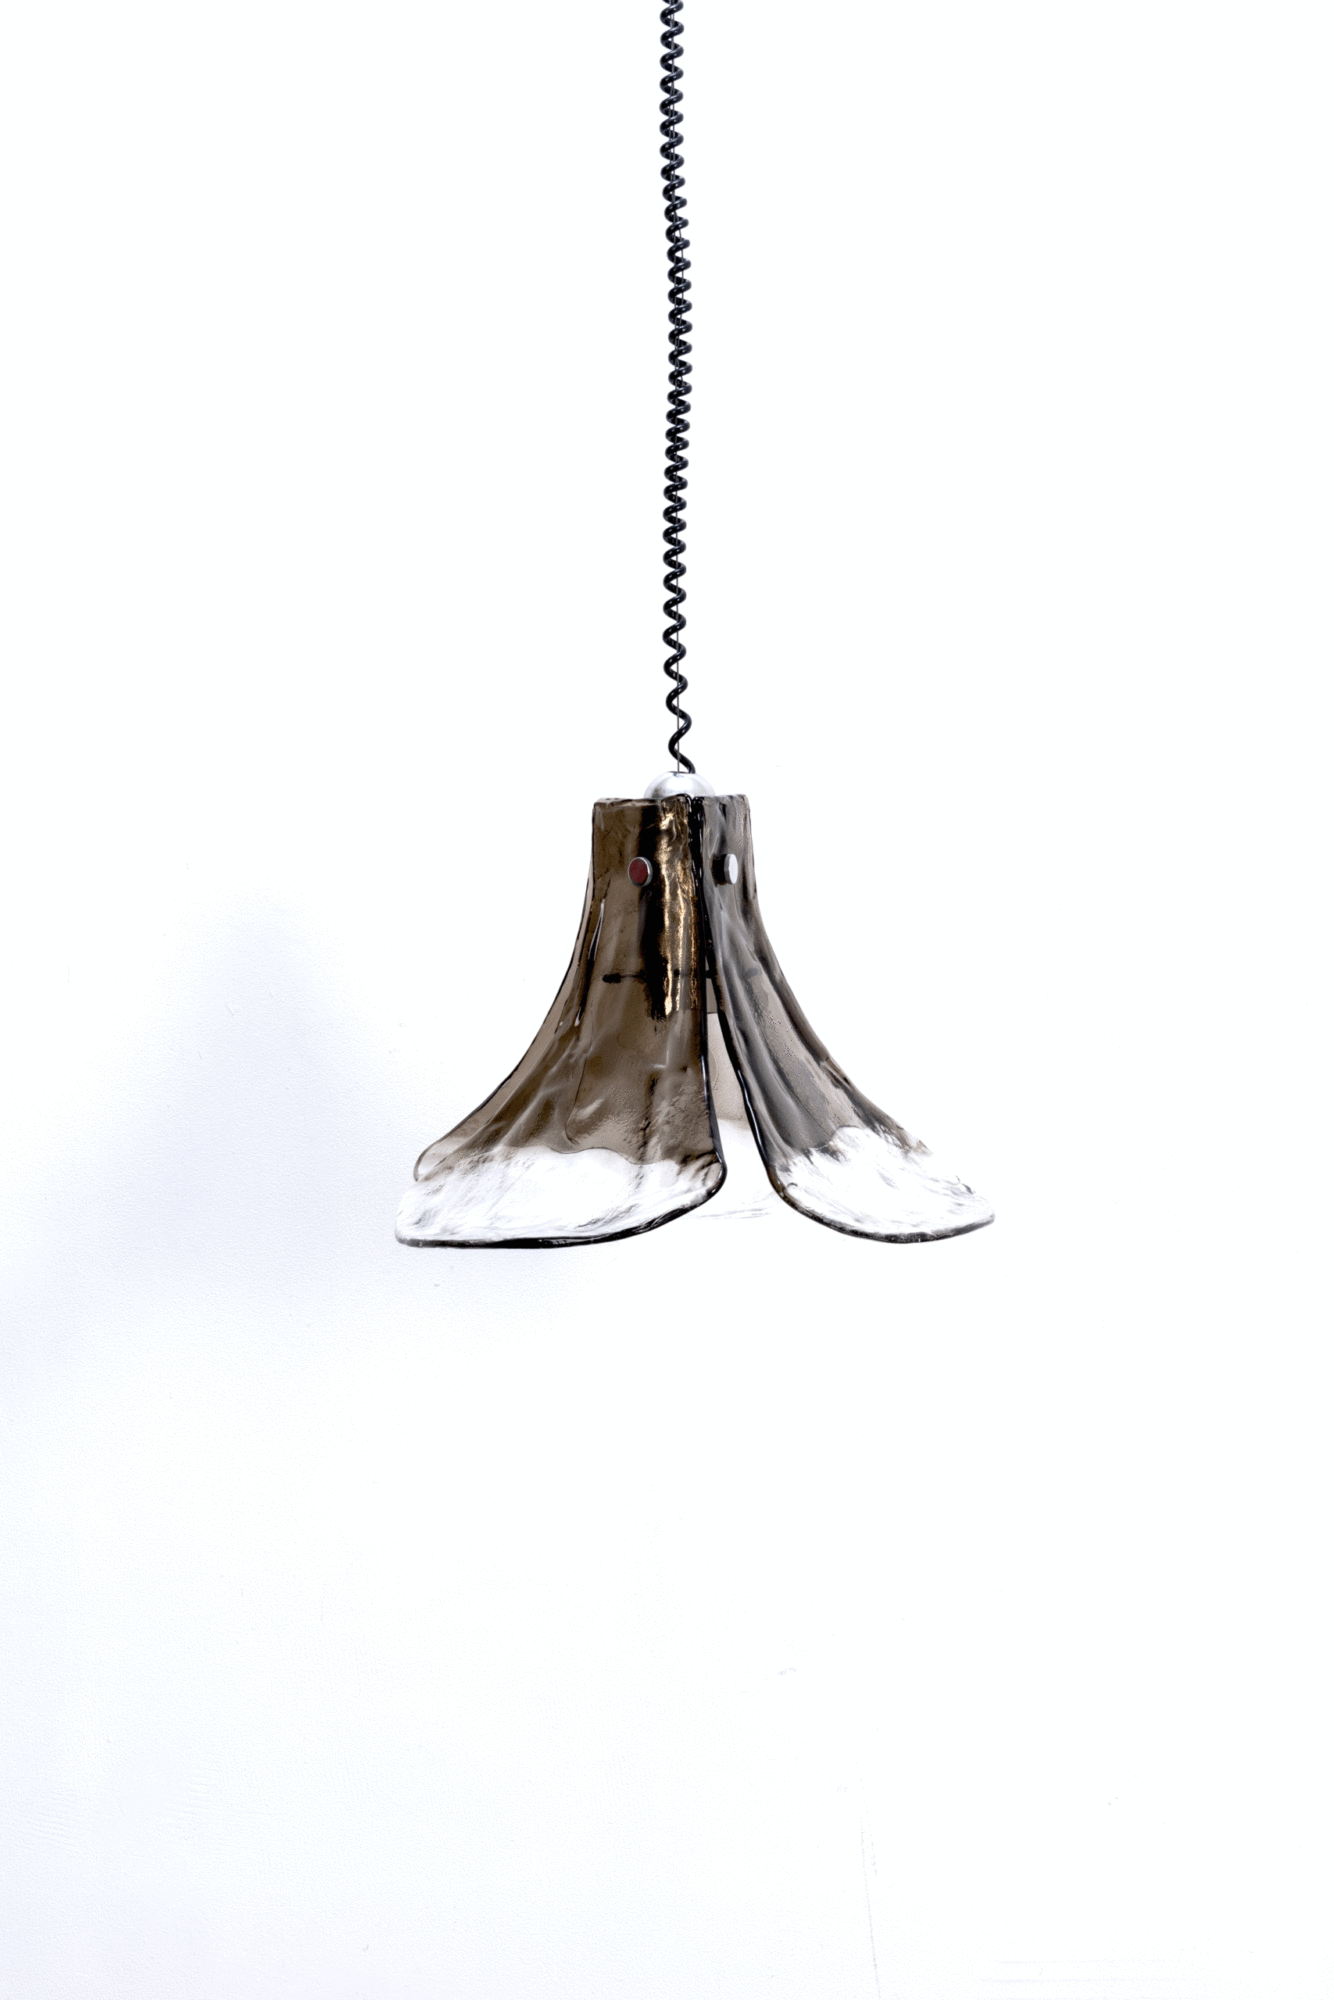 Flower-shaped Mazzega pendant lamp